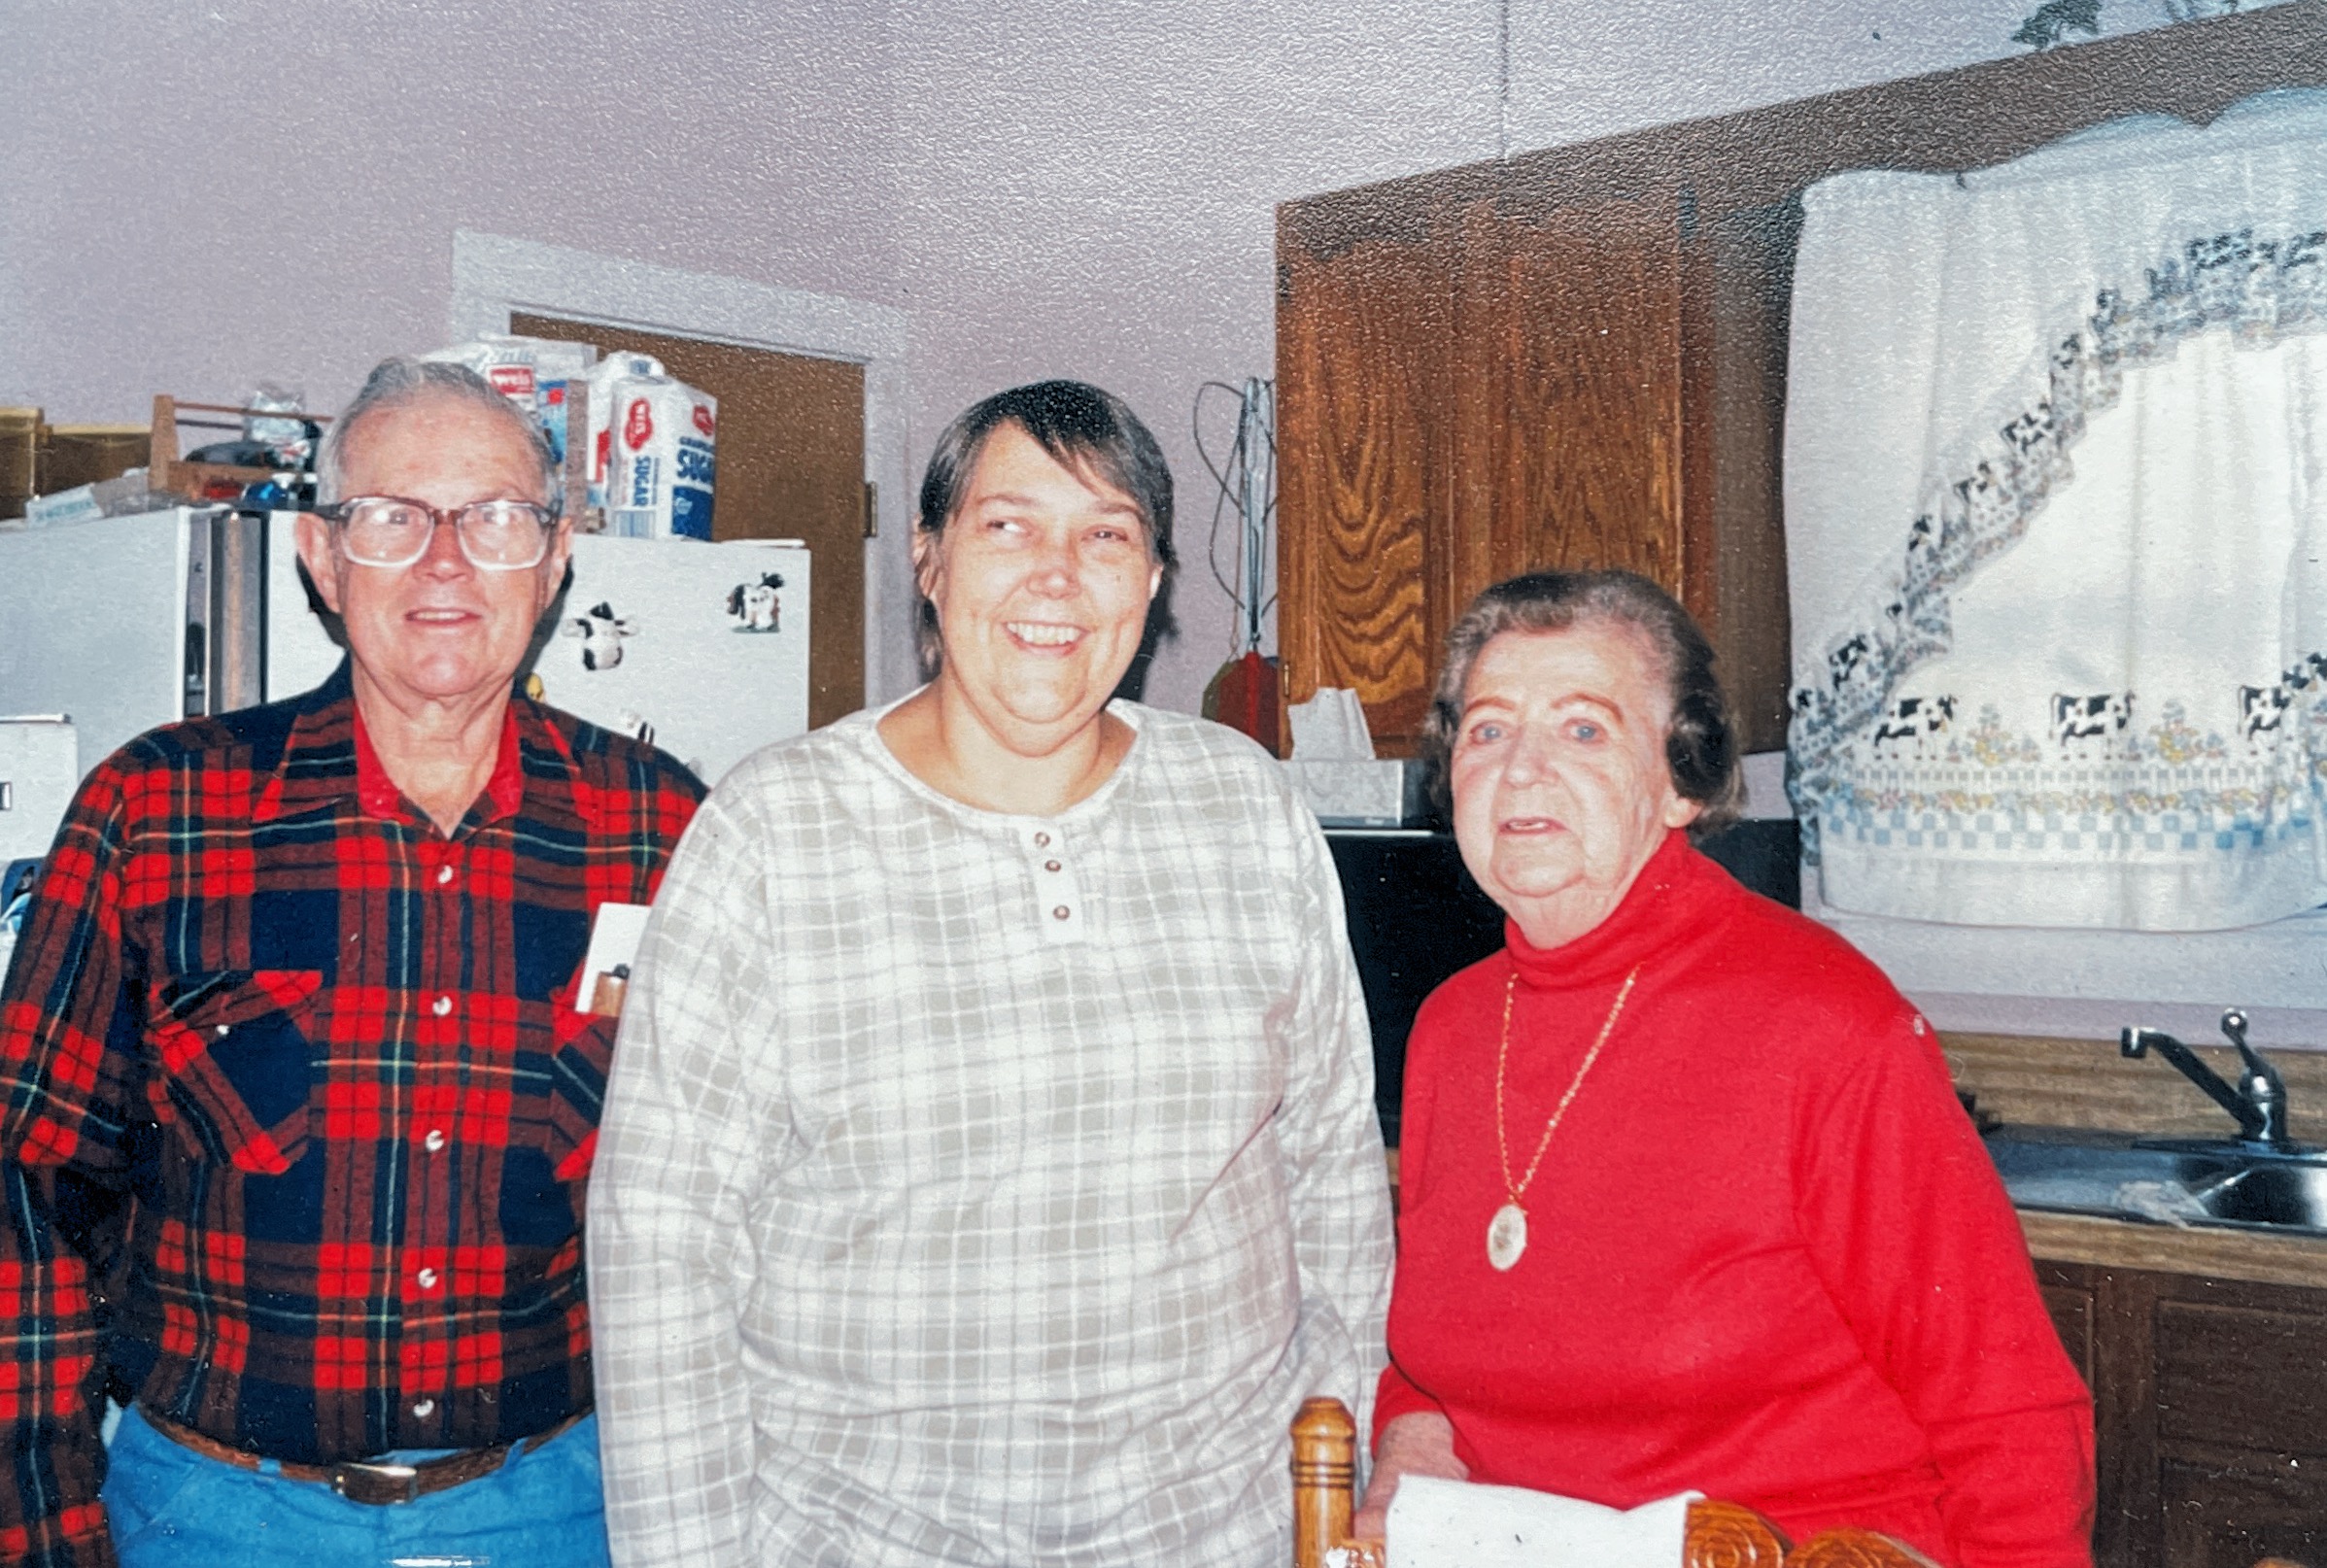 Christmas 1998.

My grandfather, Albert C. Kane, “Hunc”
His daughter, my Aunt Teresa Ann Moyer
His sister, my Great Aunt Teres Wisnieski